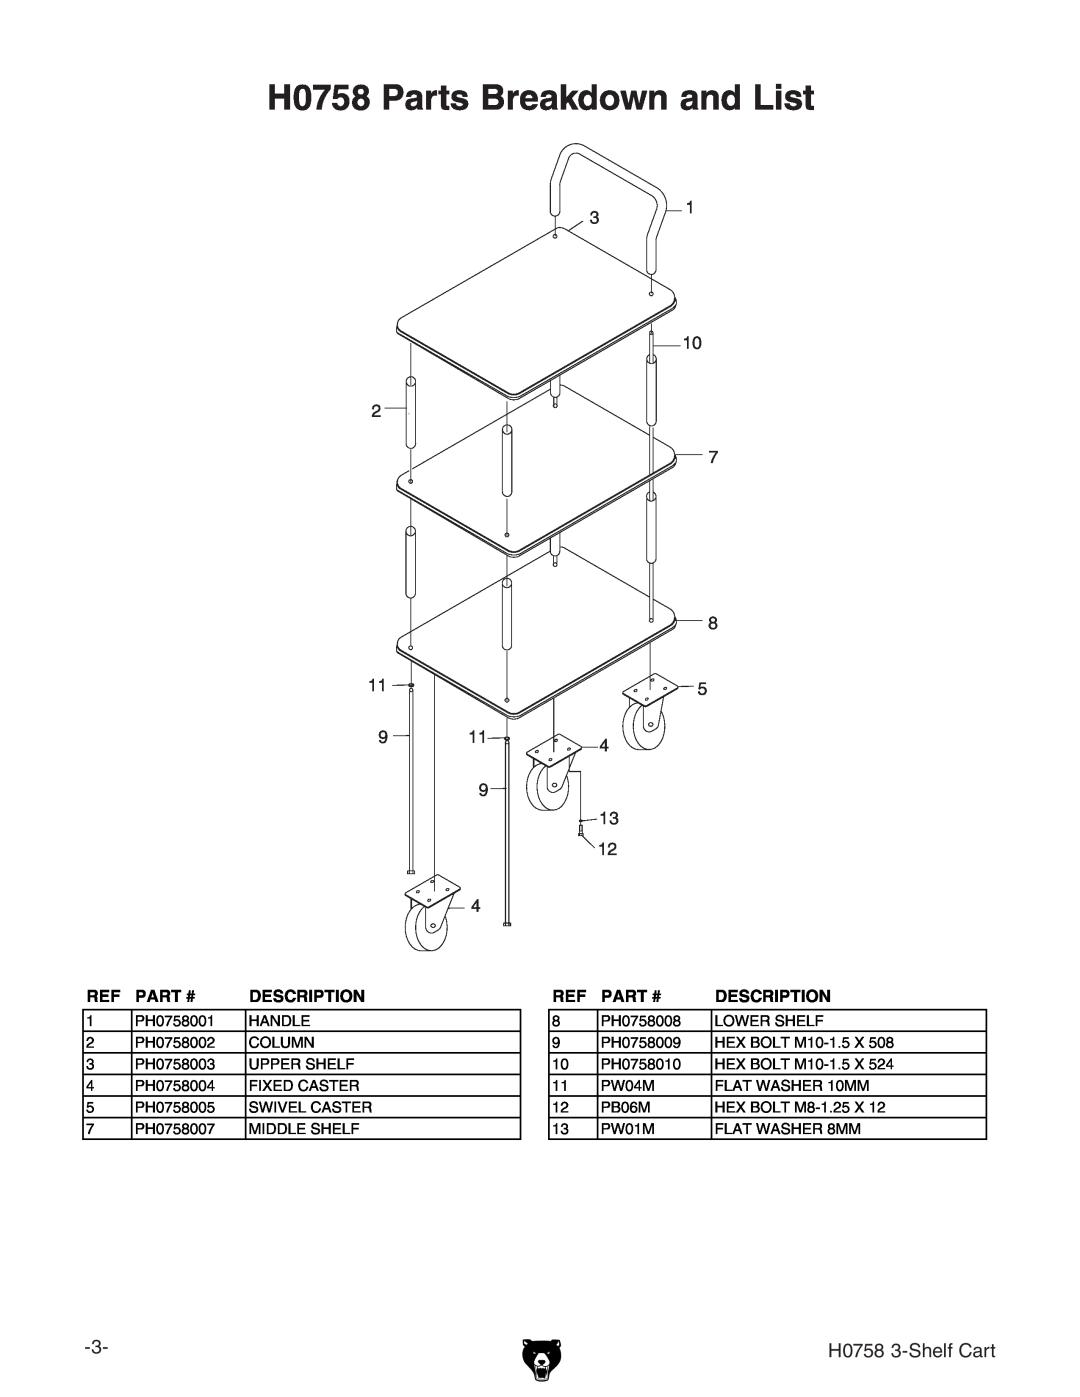 Grizzly specifications H0758 Parts Breakdown and List, Part #, Description 